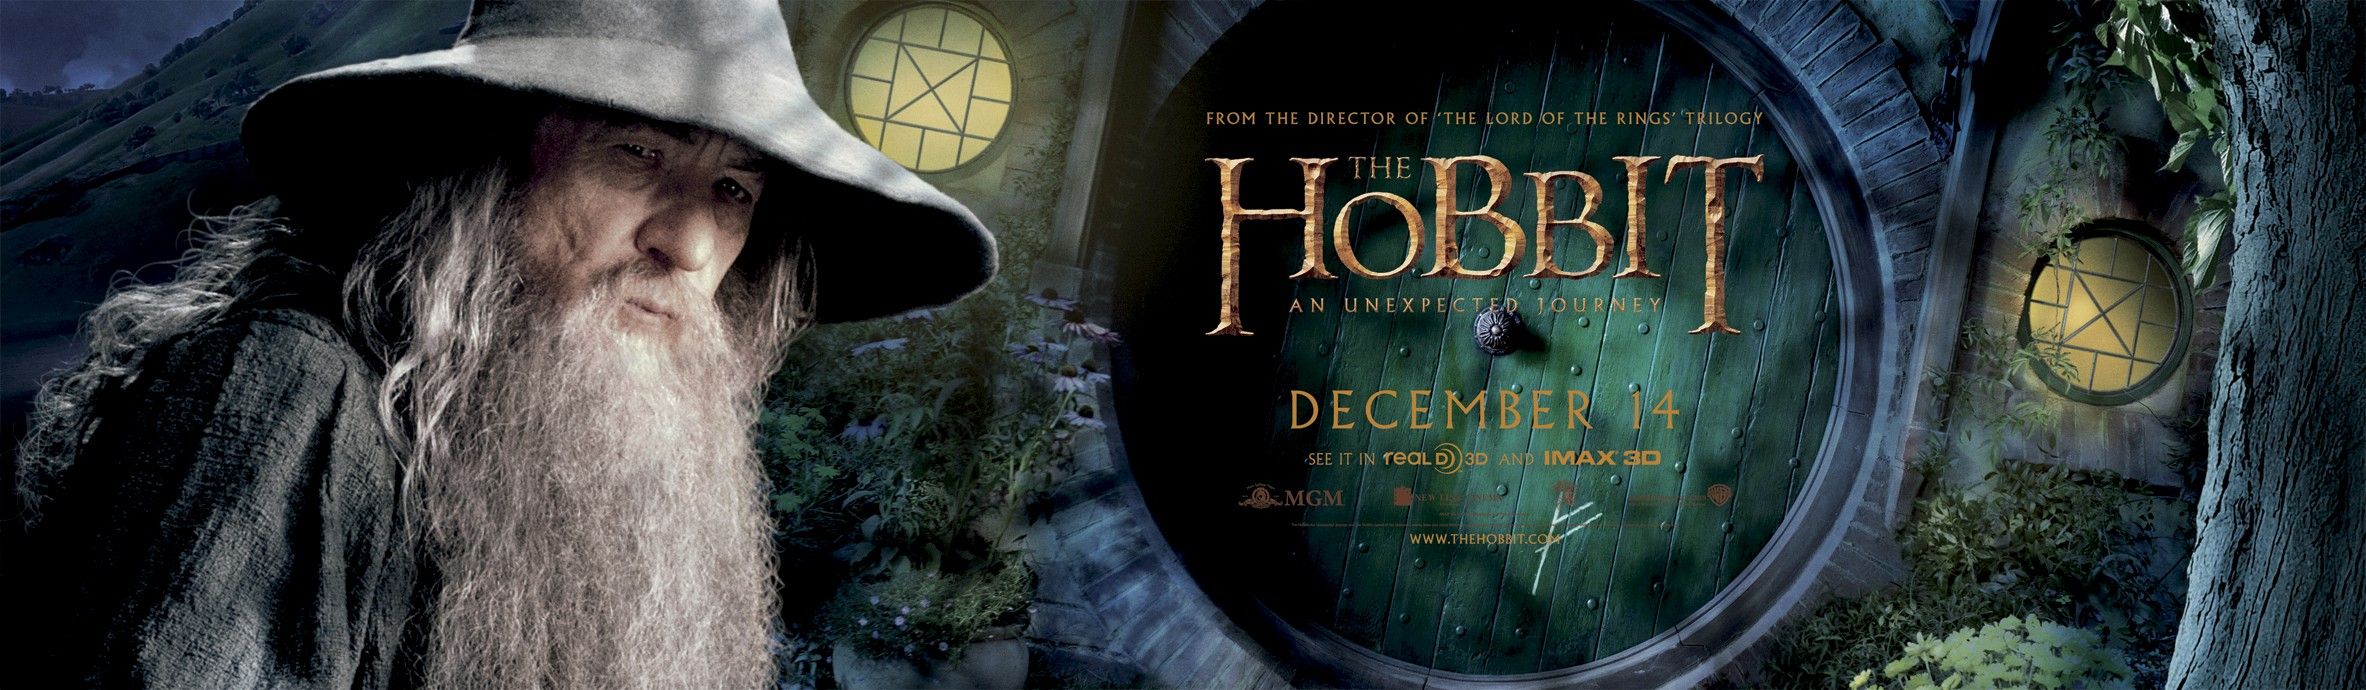 The Hobbit Poster 4